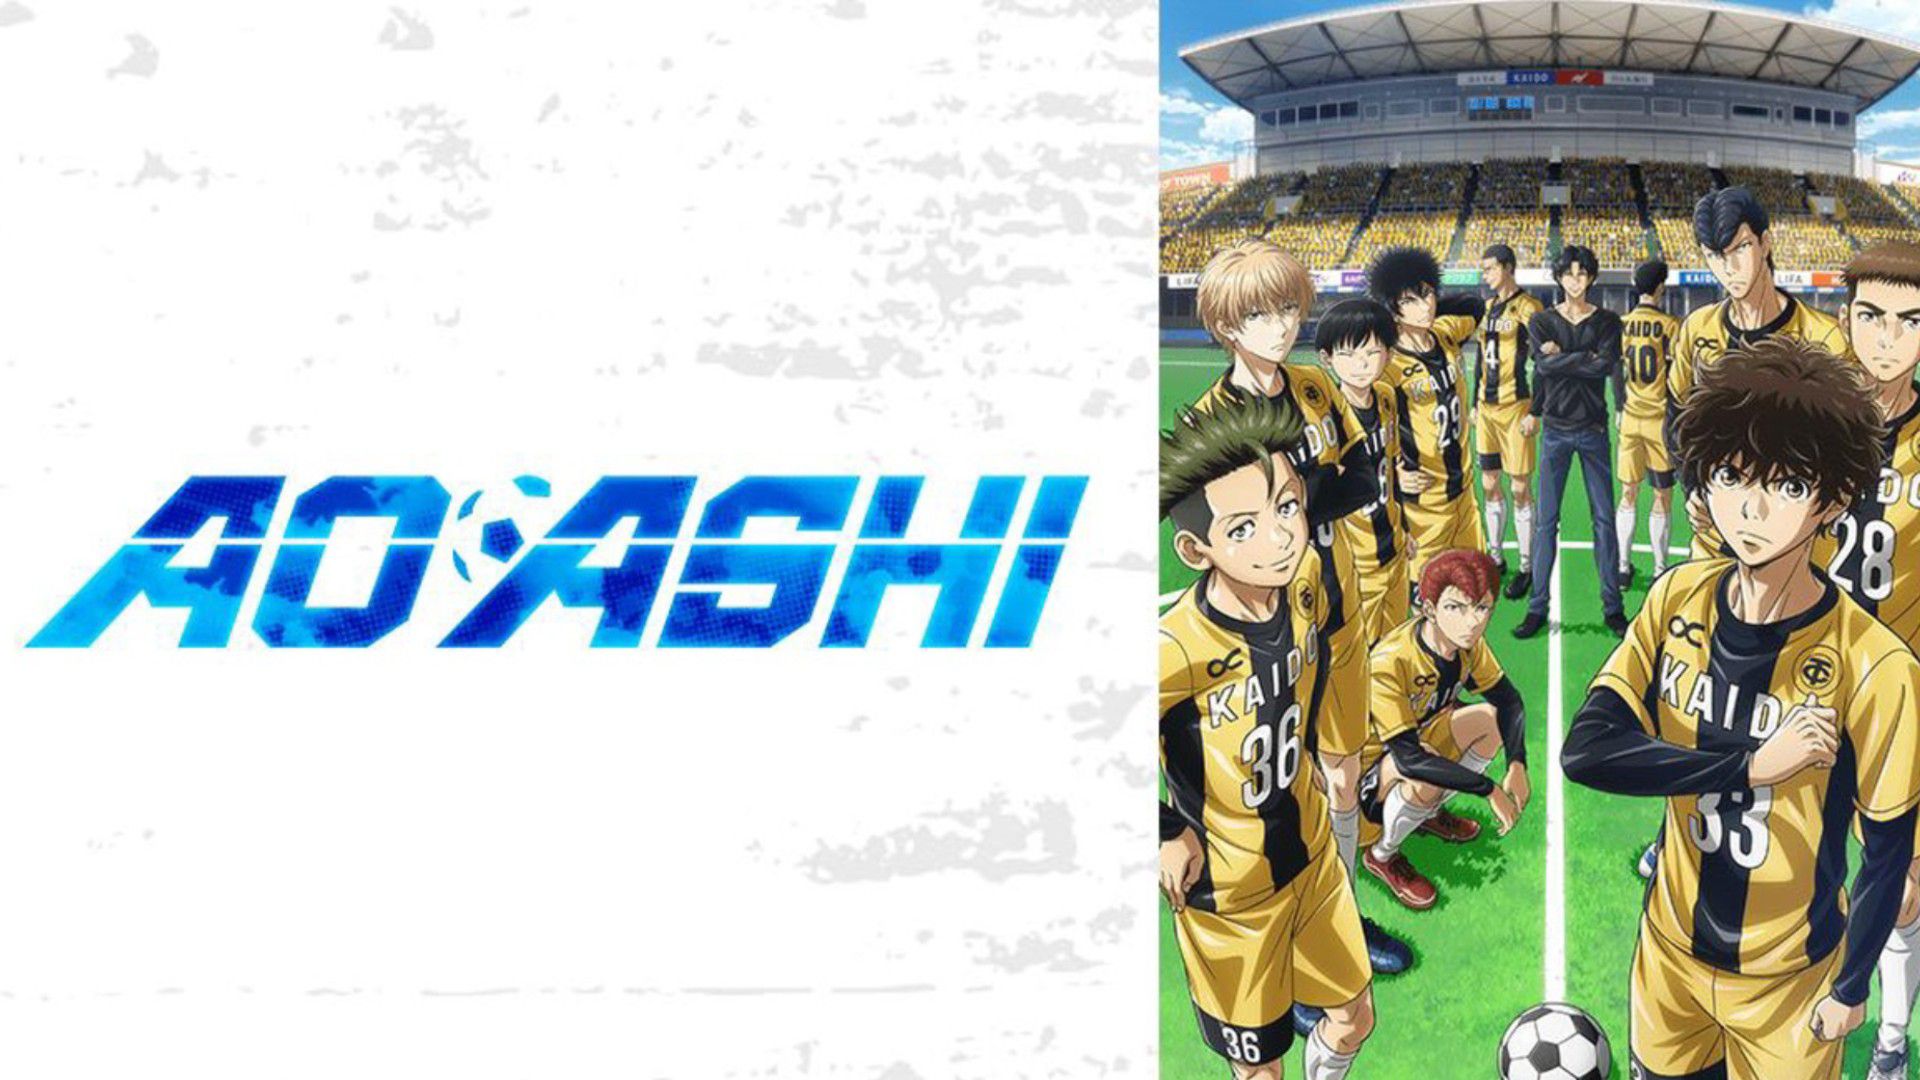 Aoashi – TV on Google Play